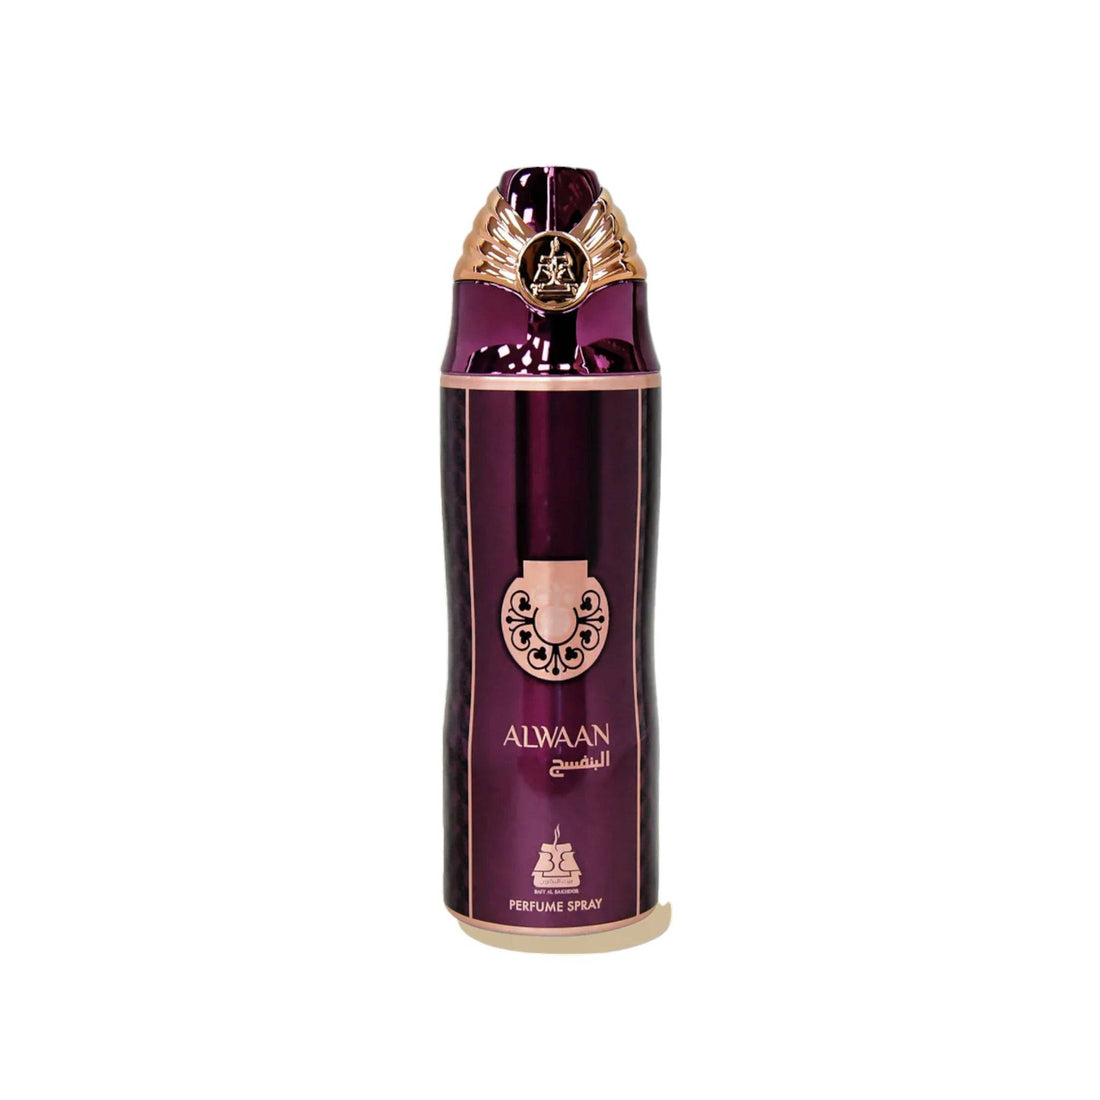 Elegant 200ml bottle of Afnan Alwaan Purple Body Spray, showcasing its vibrant purple design and luxurious appeal.